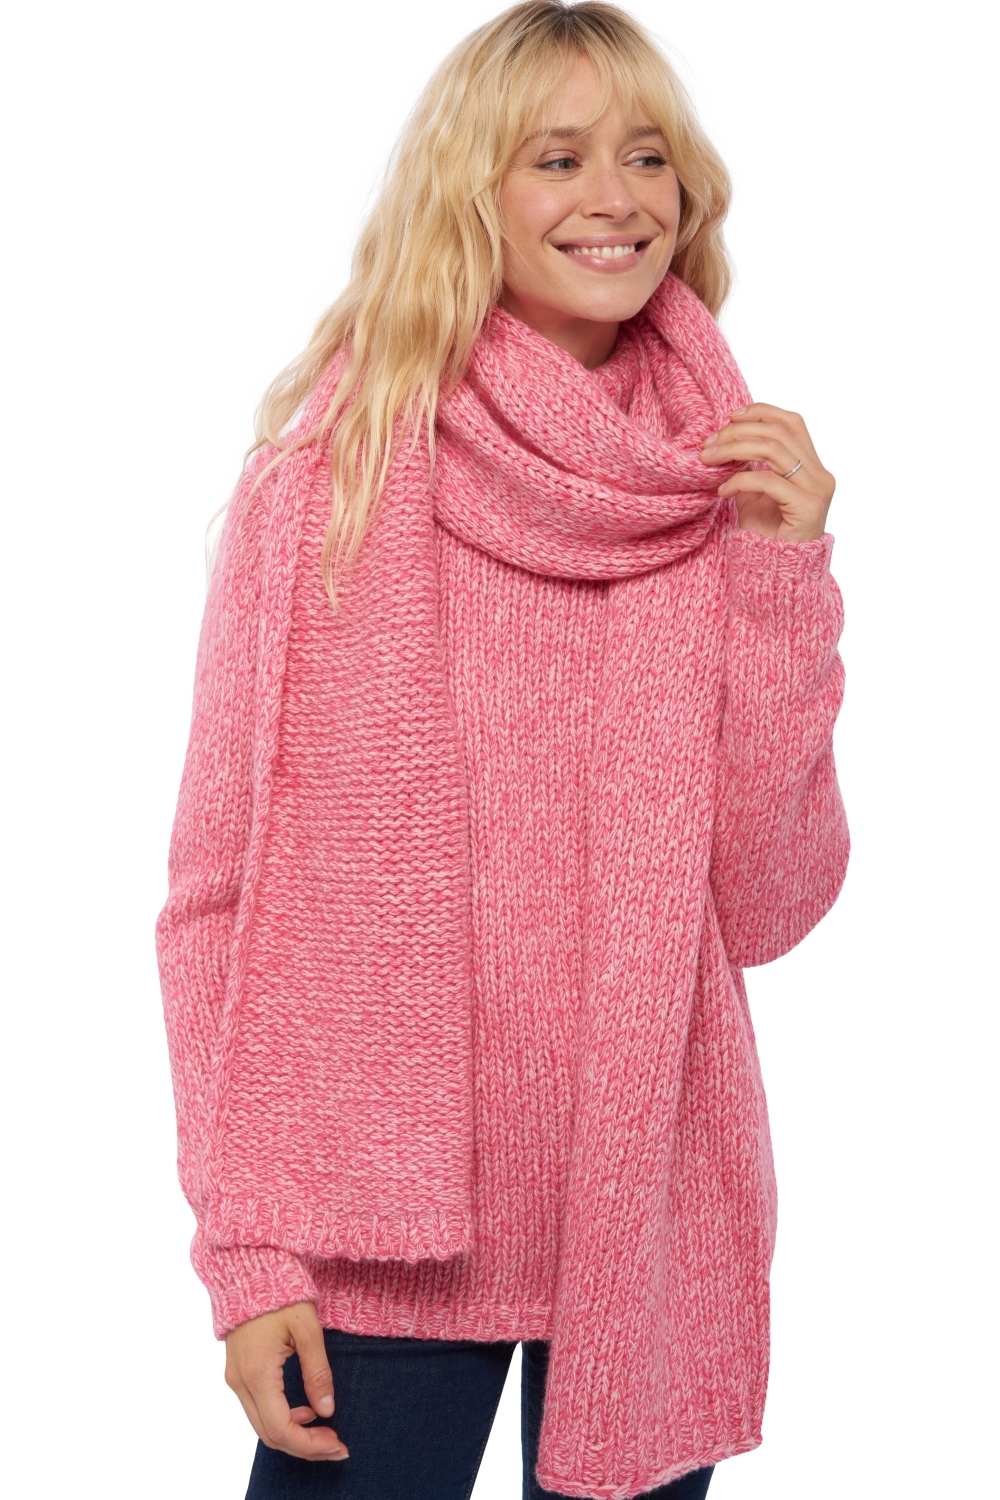 Cashmere accessori novita venus rosa shocking rosa pallido 200 x 38 cm